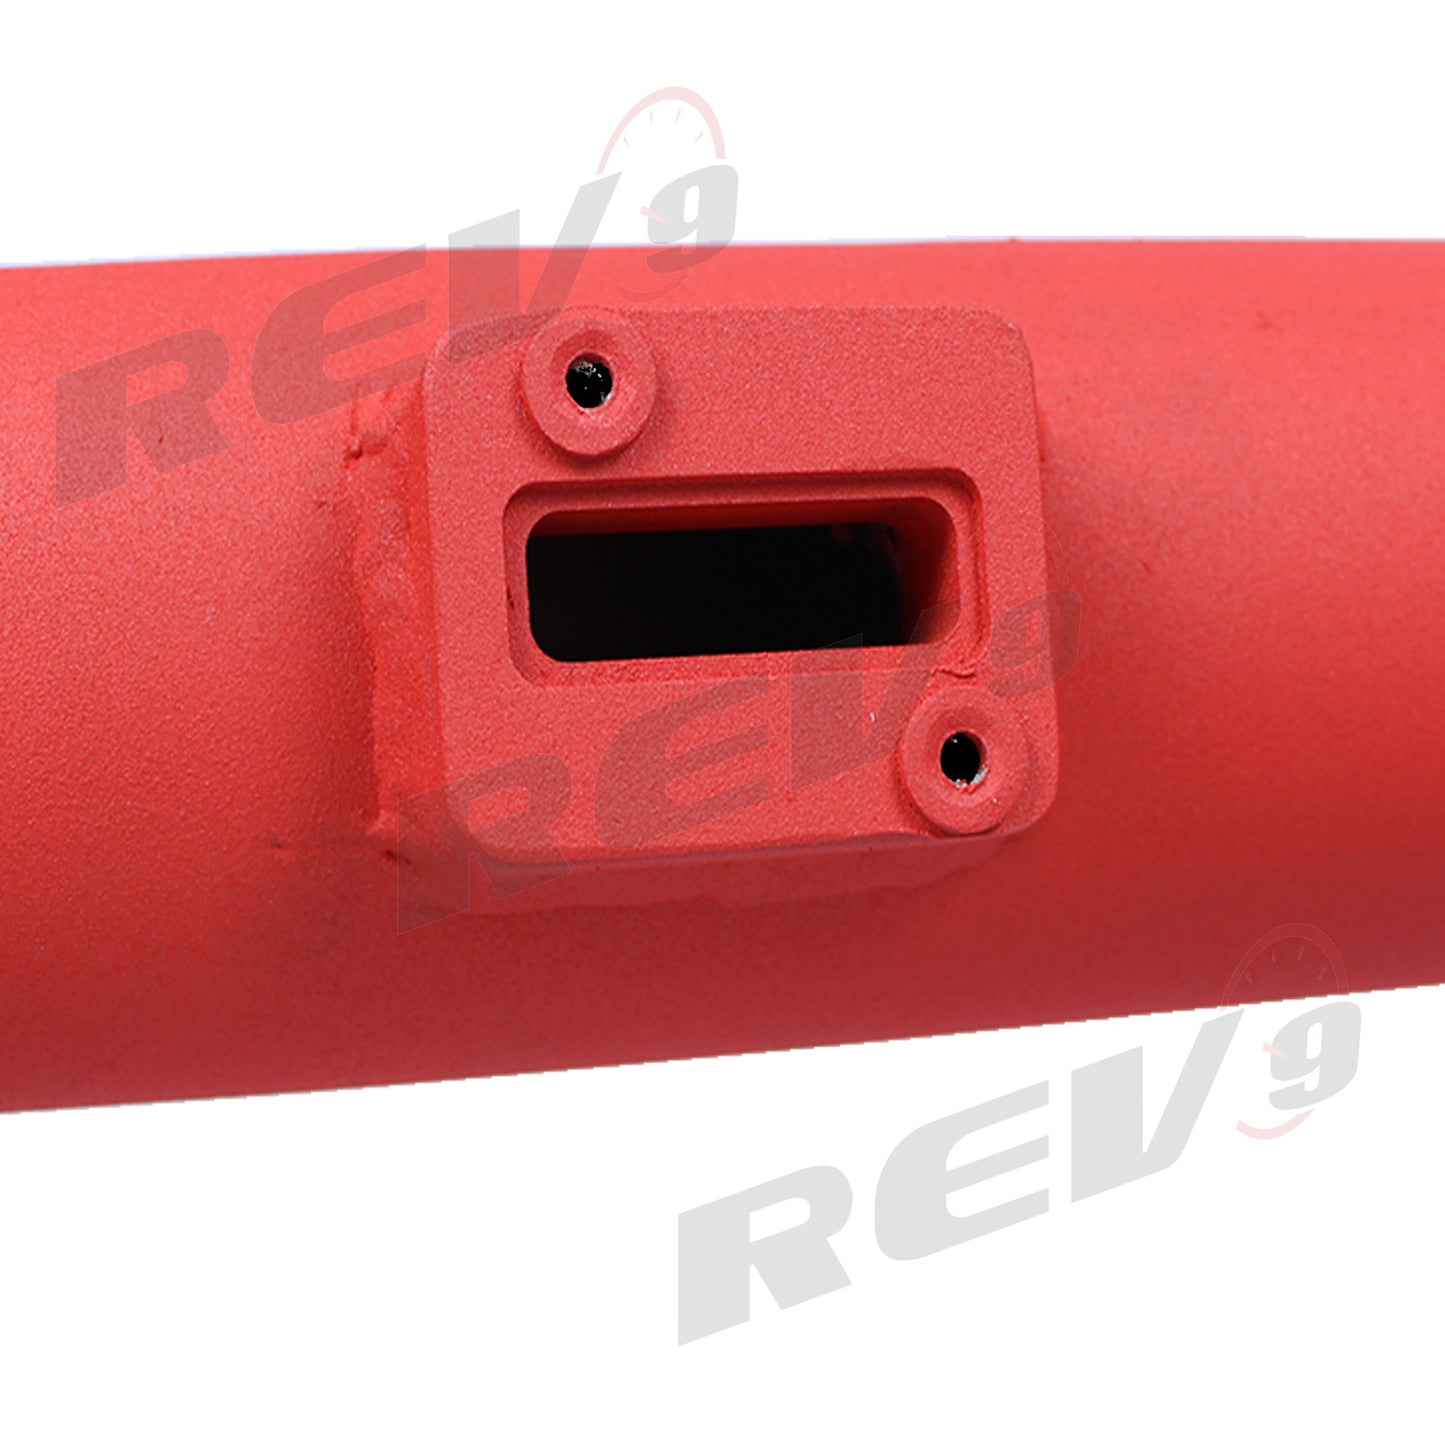 Rev9 Hi-Flow Intake Pipe for Volkswagen Golf R MK6 EA113 2.0t Turbo FSI (Wrinkle Red)